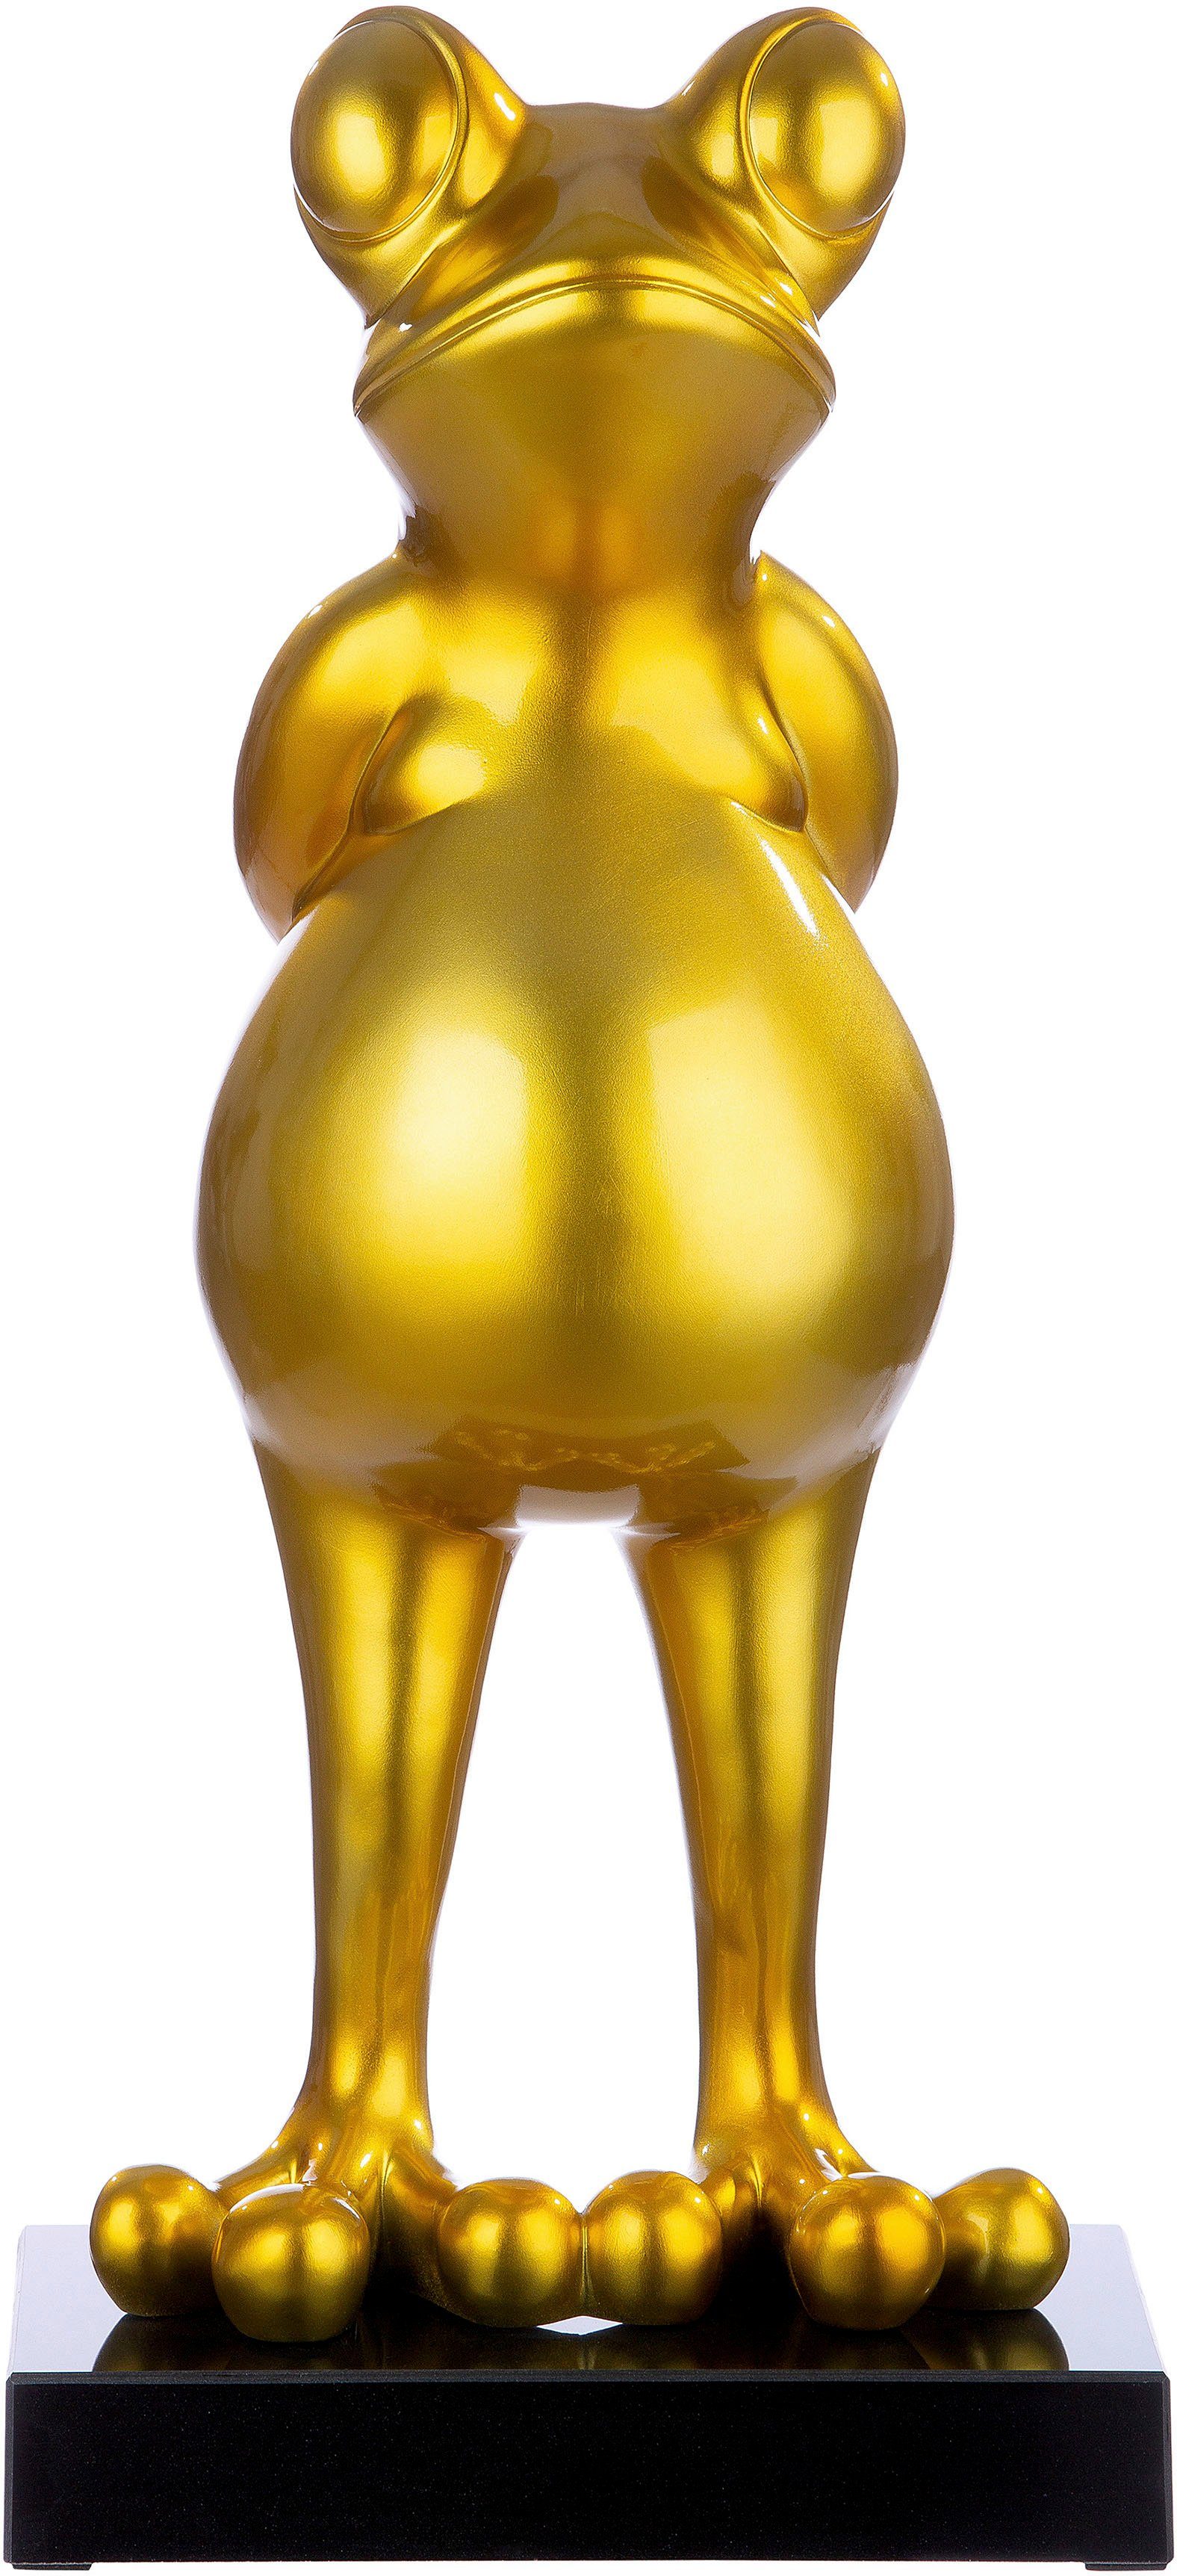 Gilde Frosch (1 Casablanca Skulptur Tierfigur gold by St)